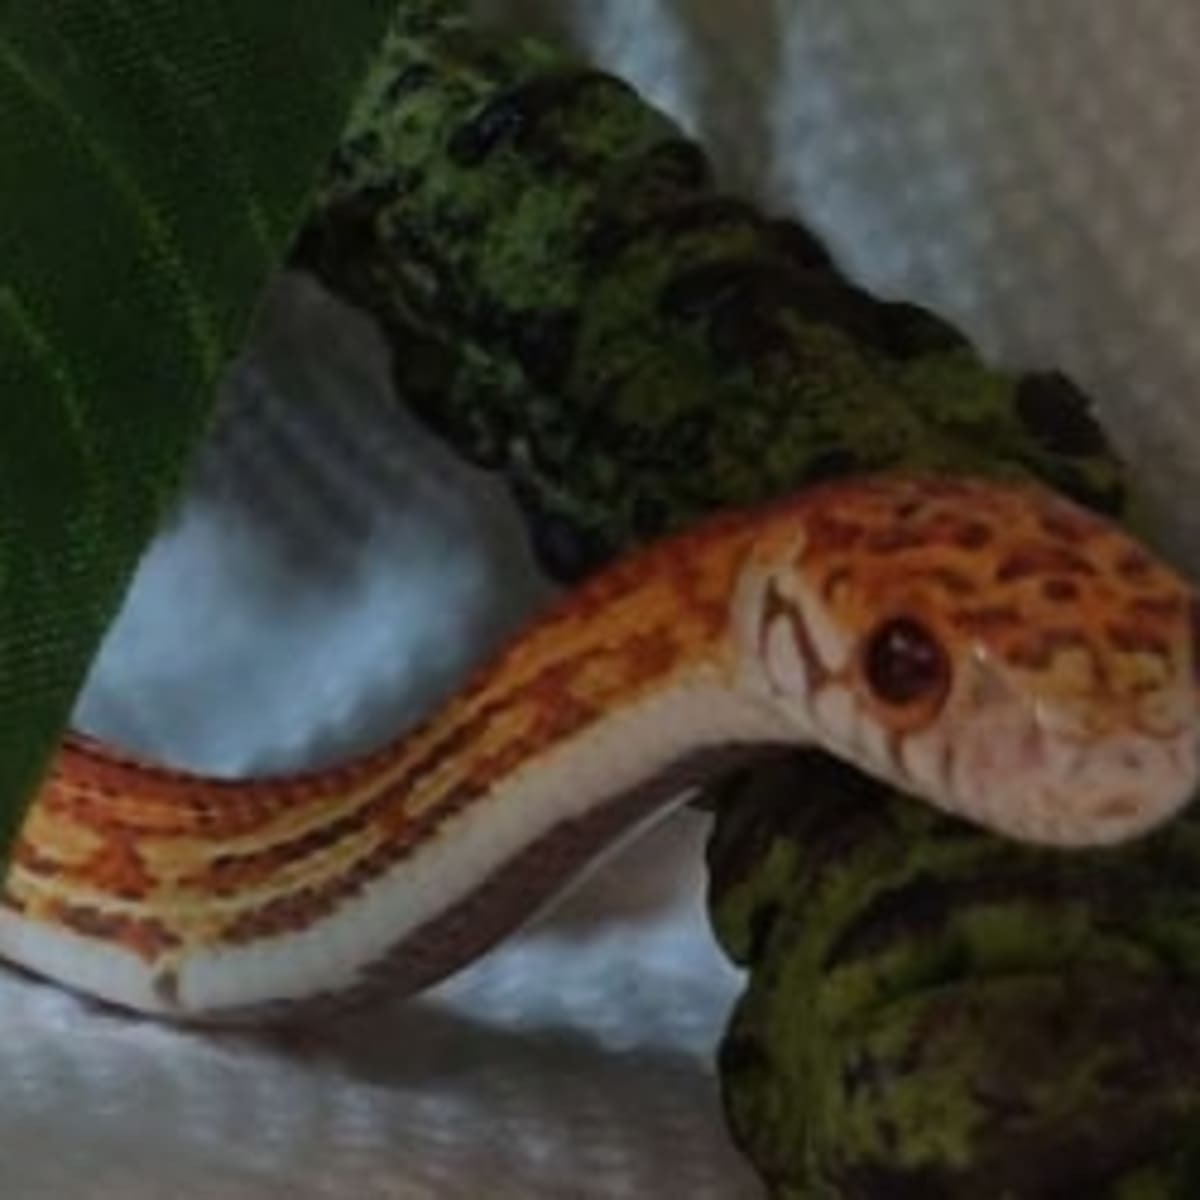 cute corn snake